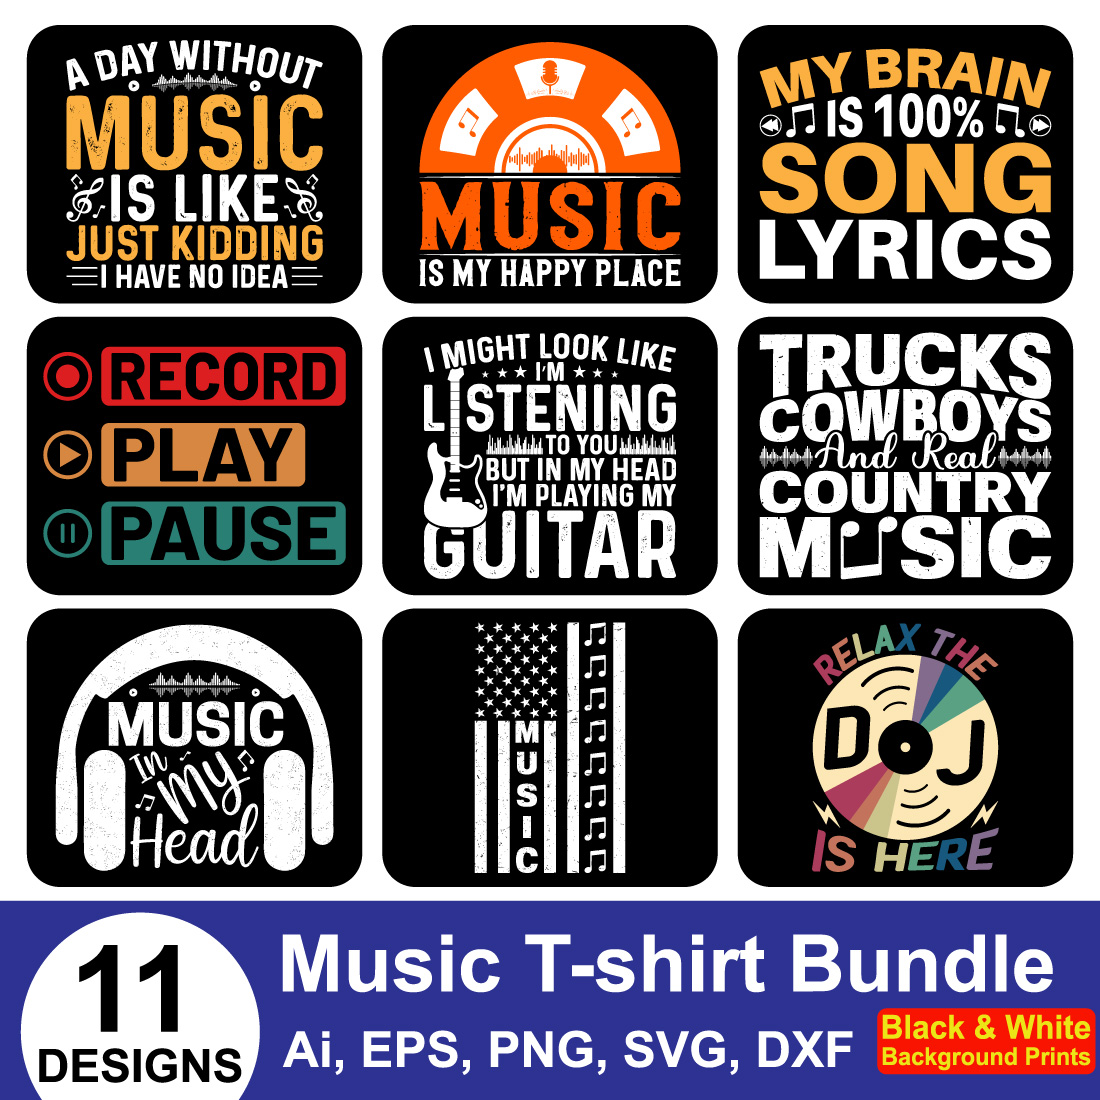 Dj Music Motivational T-shirt Design image cover.